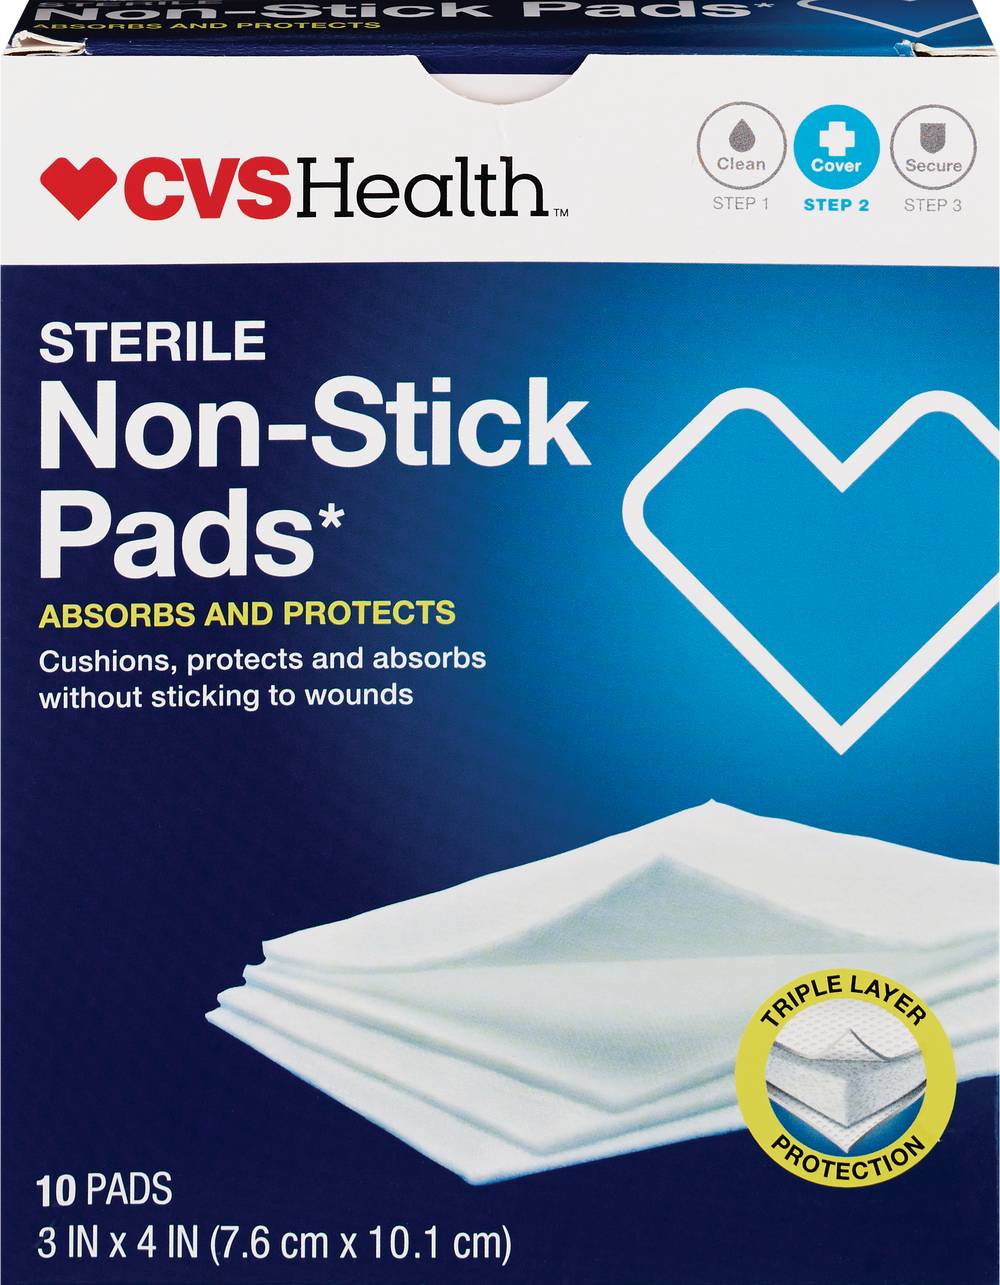 CVS Health Sterile Latex-Free Non-Stick Pads, 3 IN x 4 IN, 10 CT